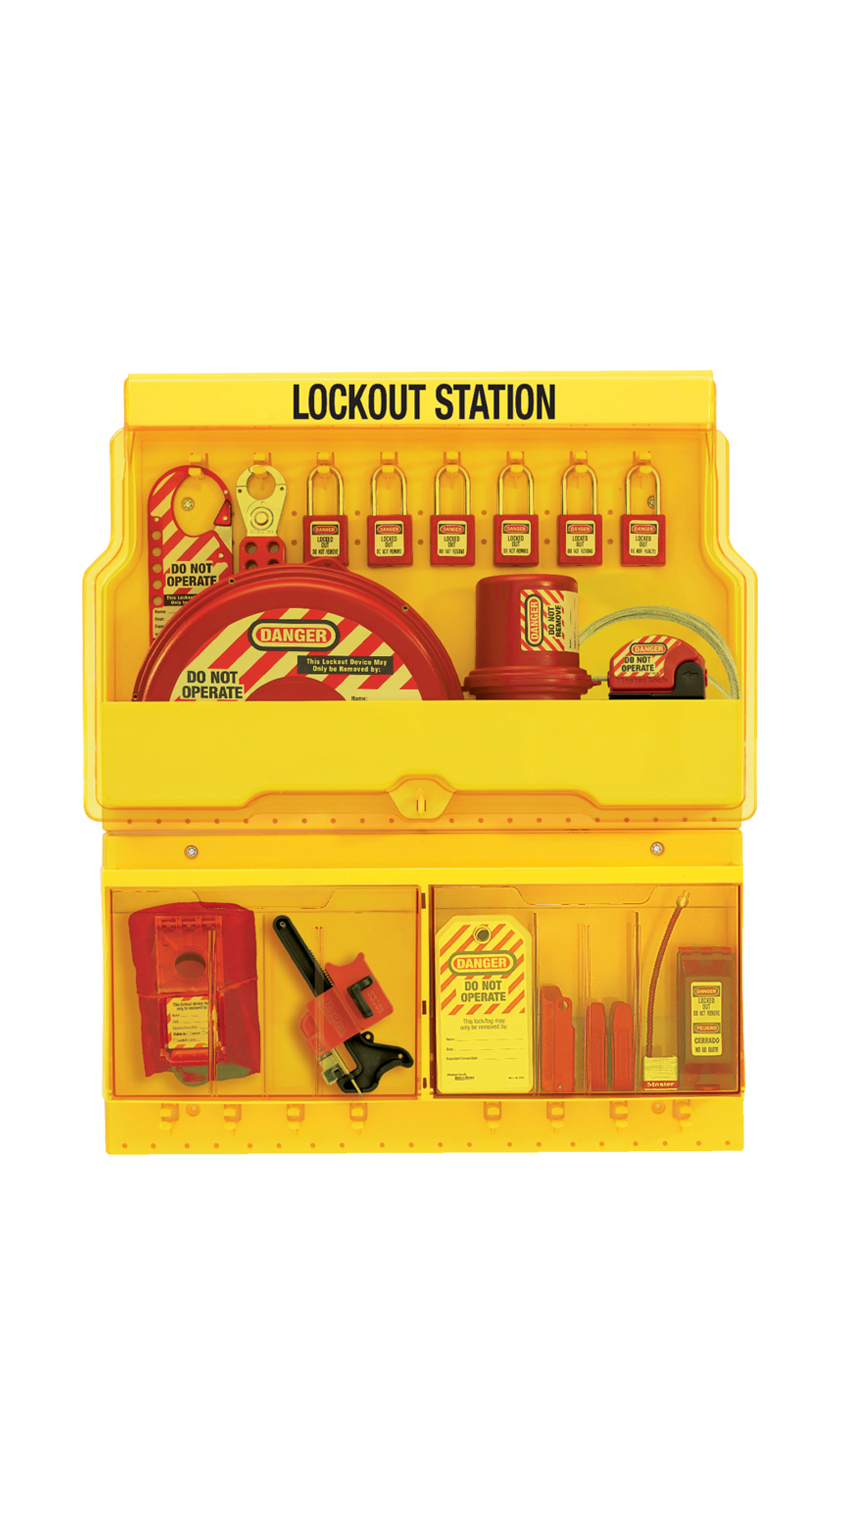 Lockout Tagout Stationen